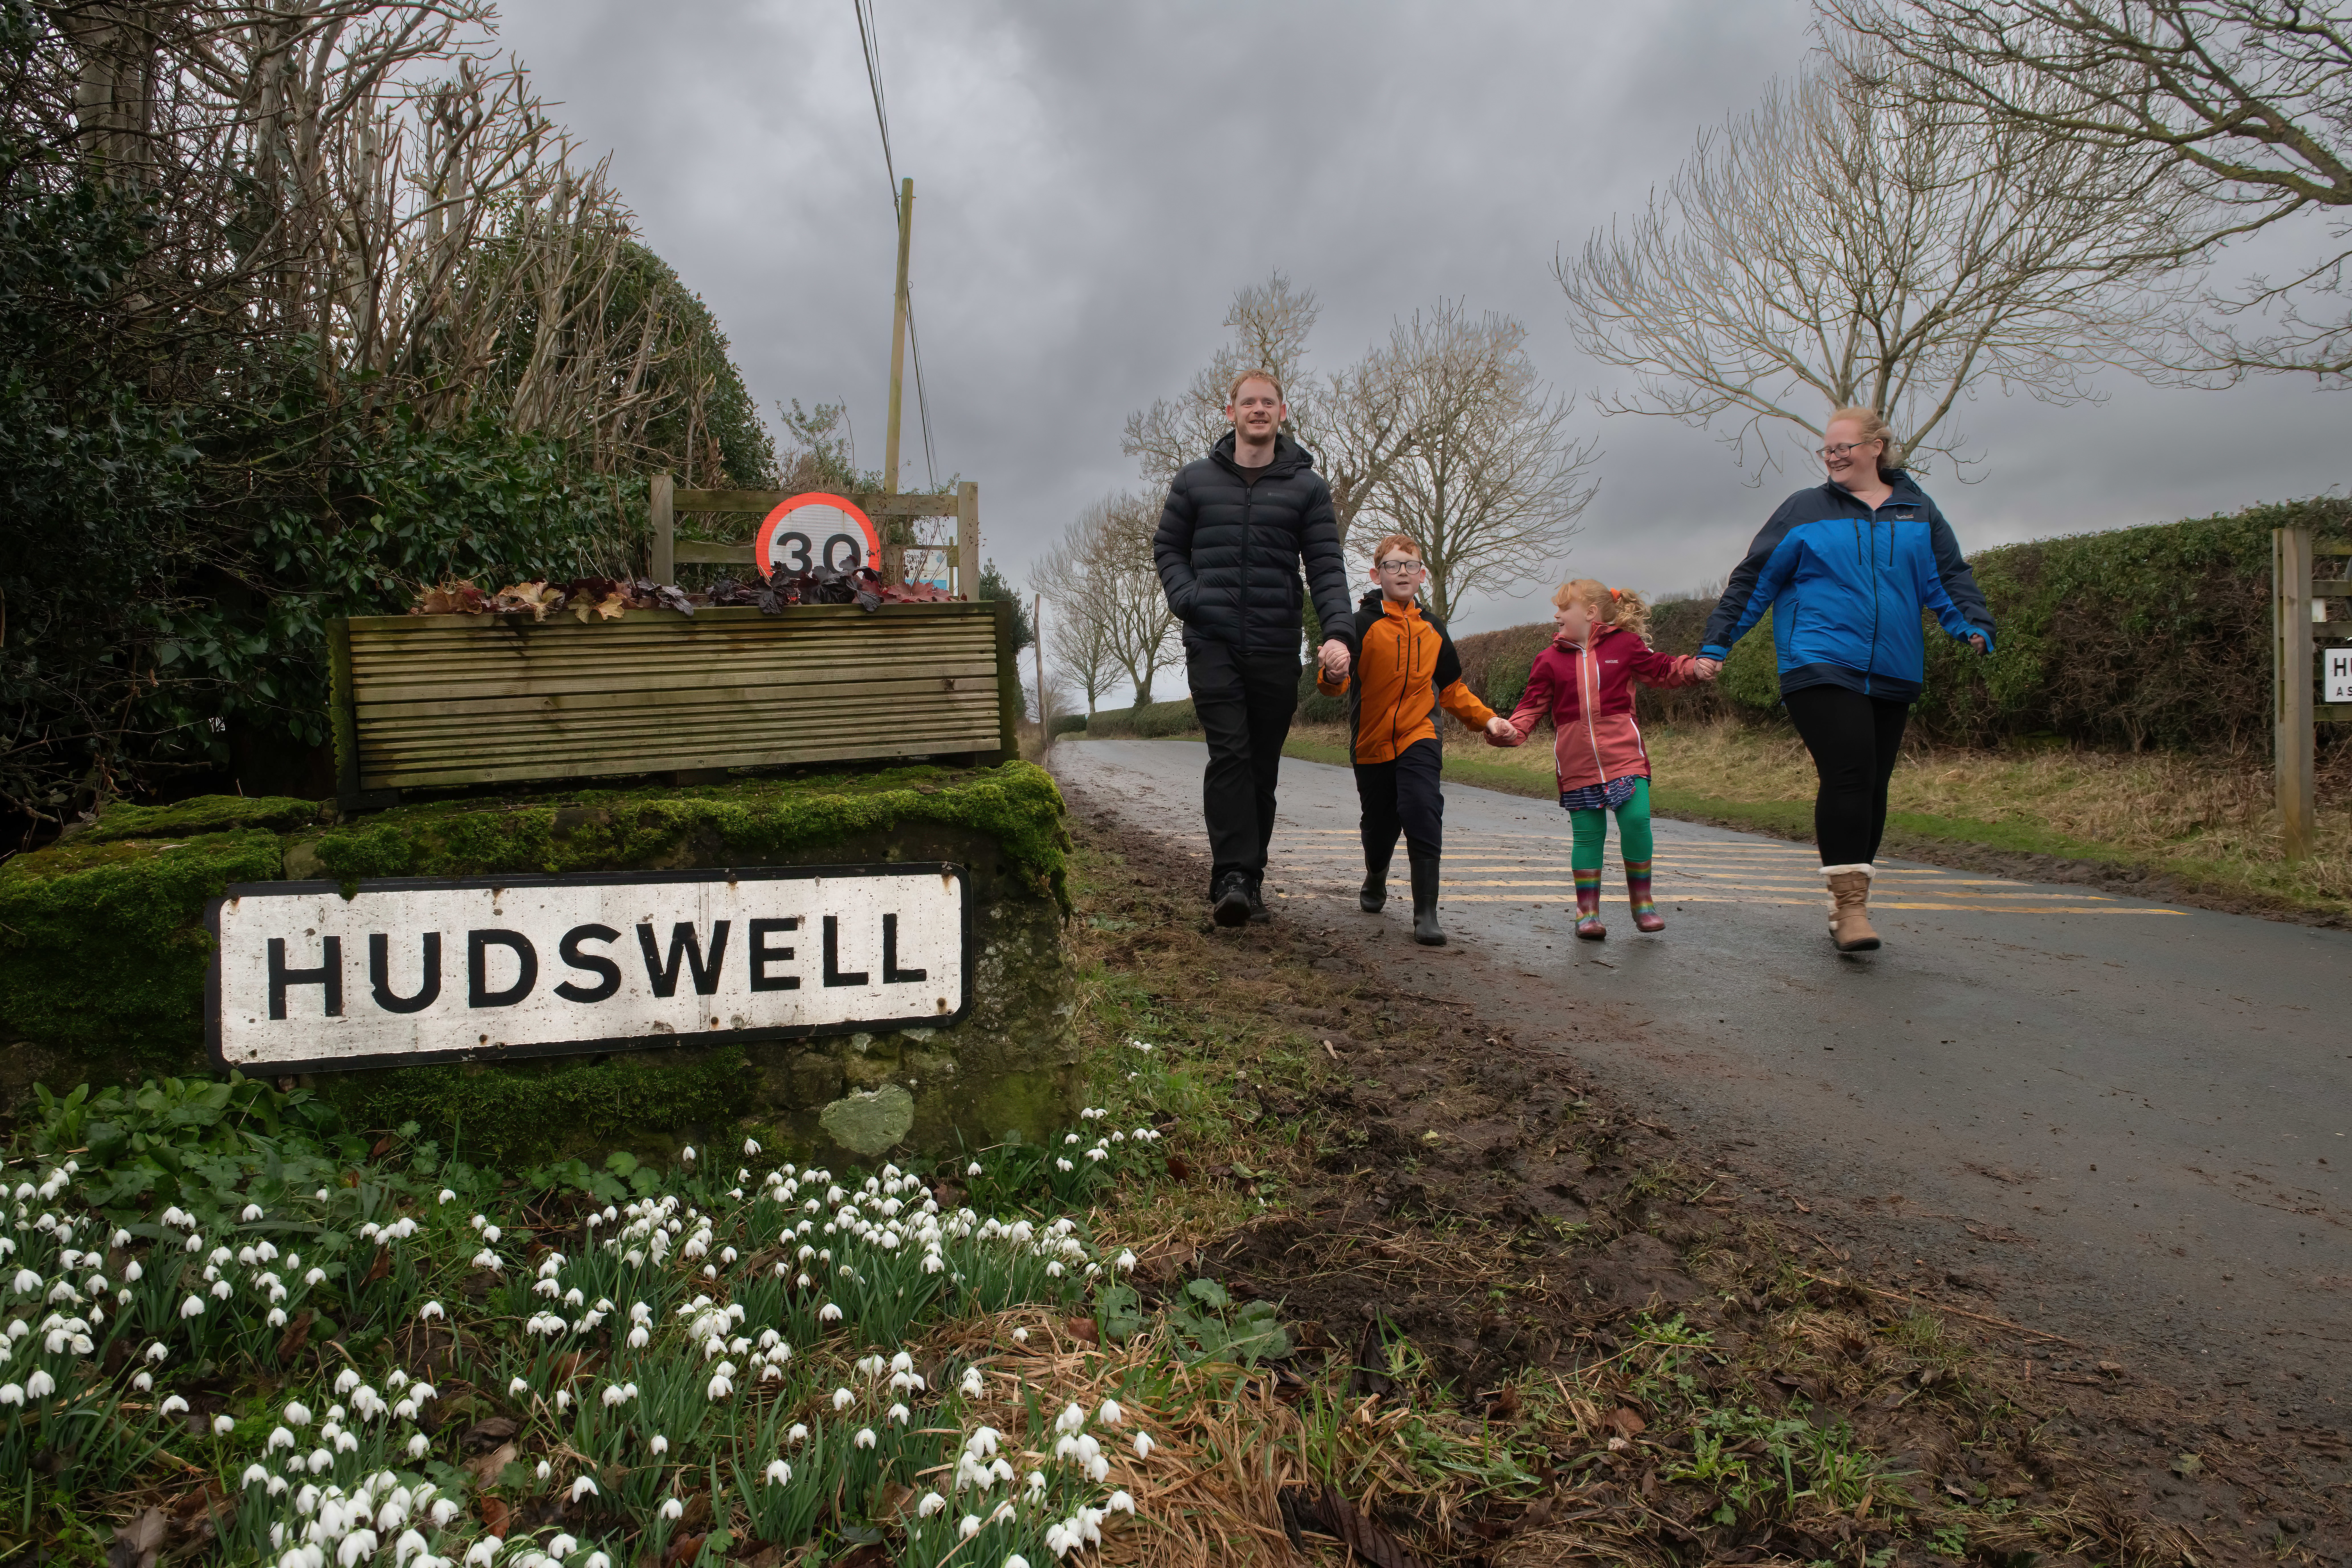 The Harper family walking in Hudswell